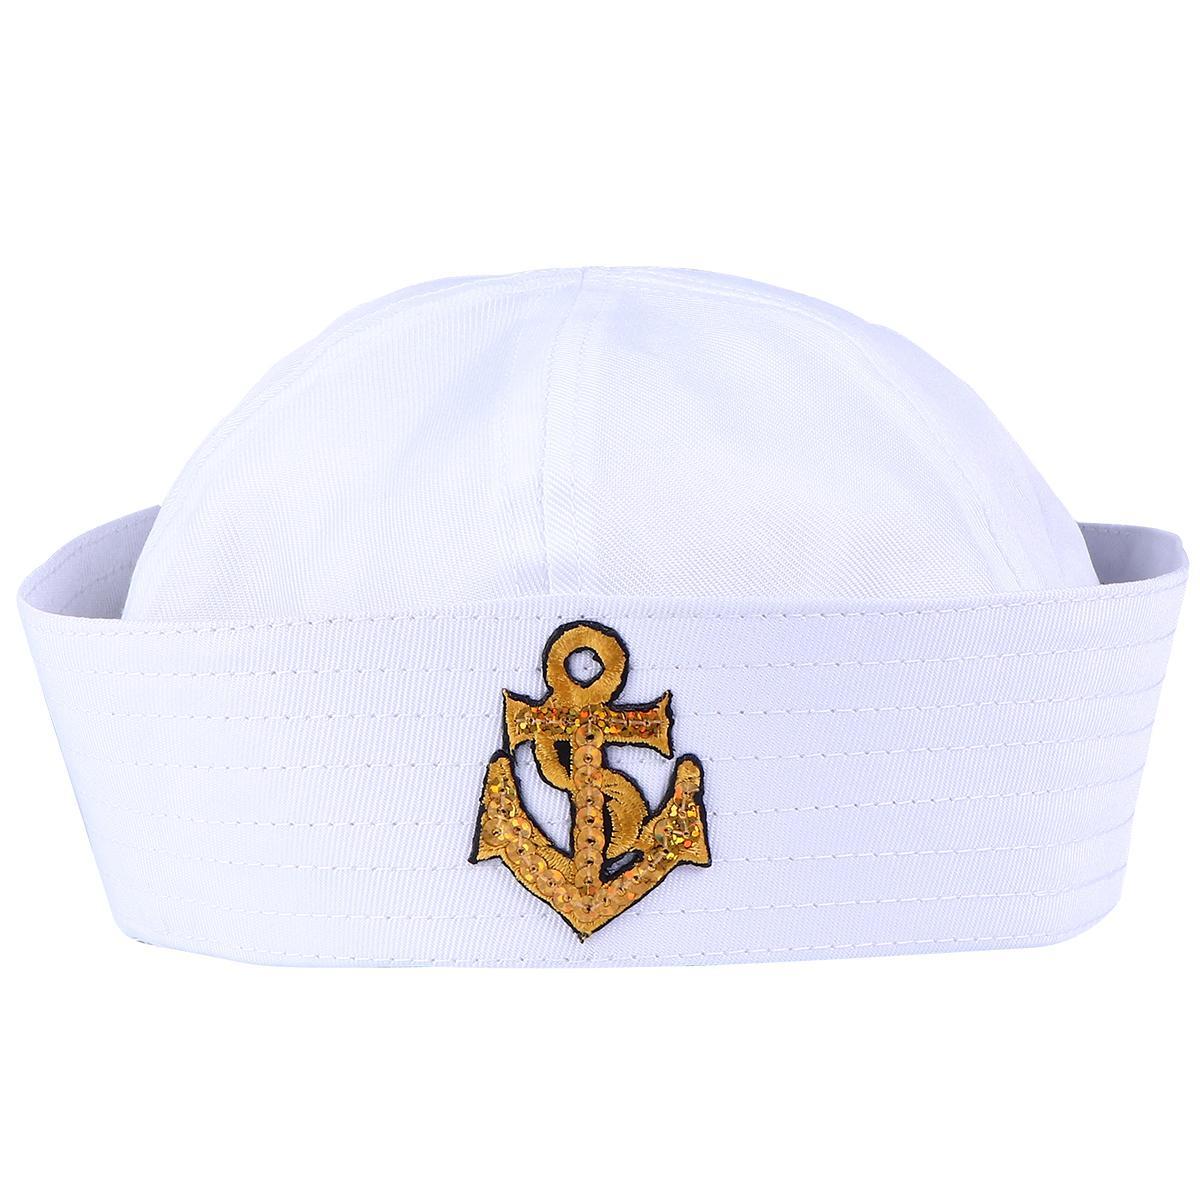 Cosplay Costume Accessory Sailor Accessories Men Caps Hat Kids